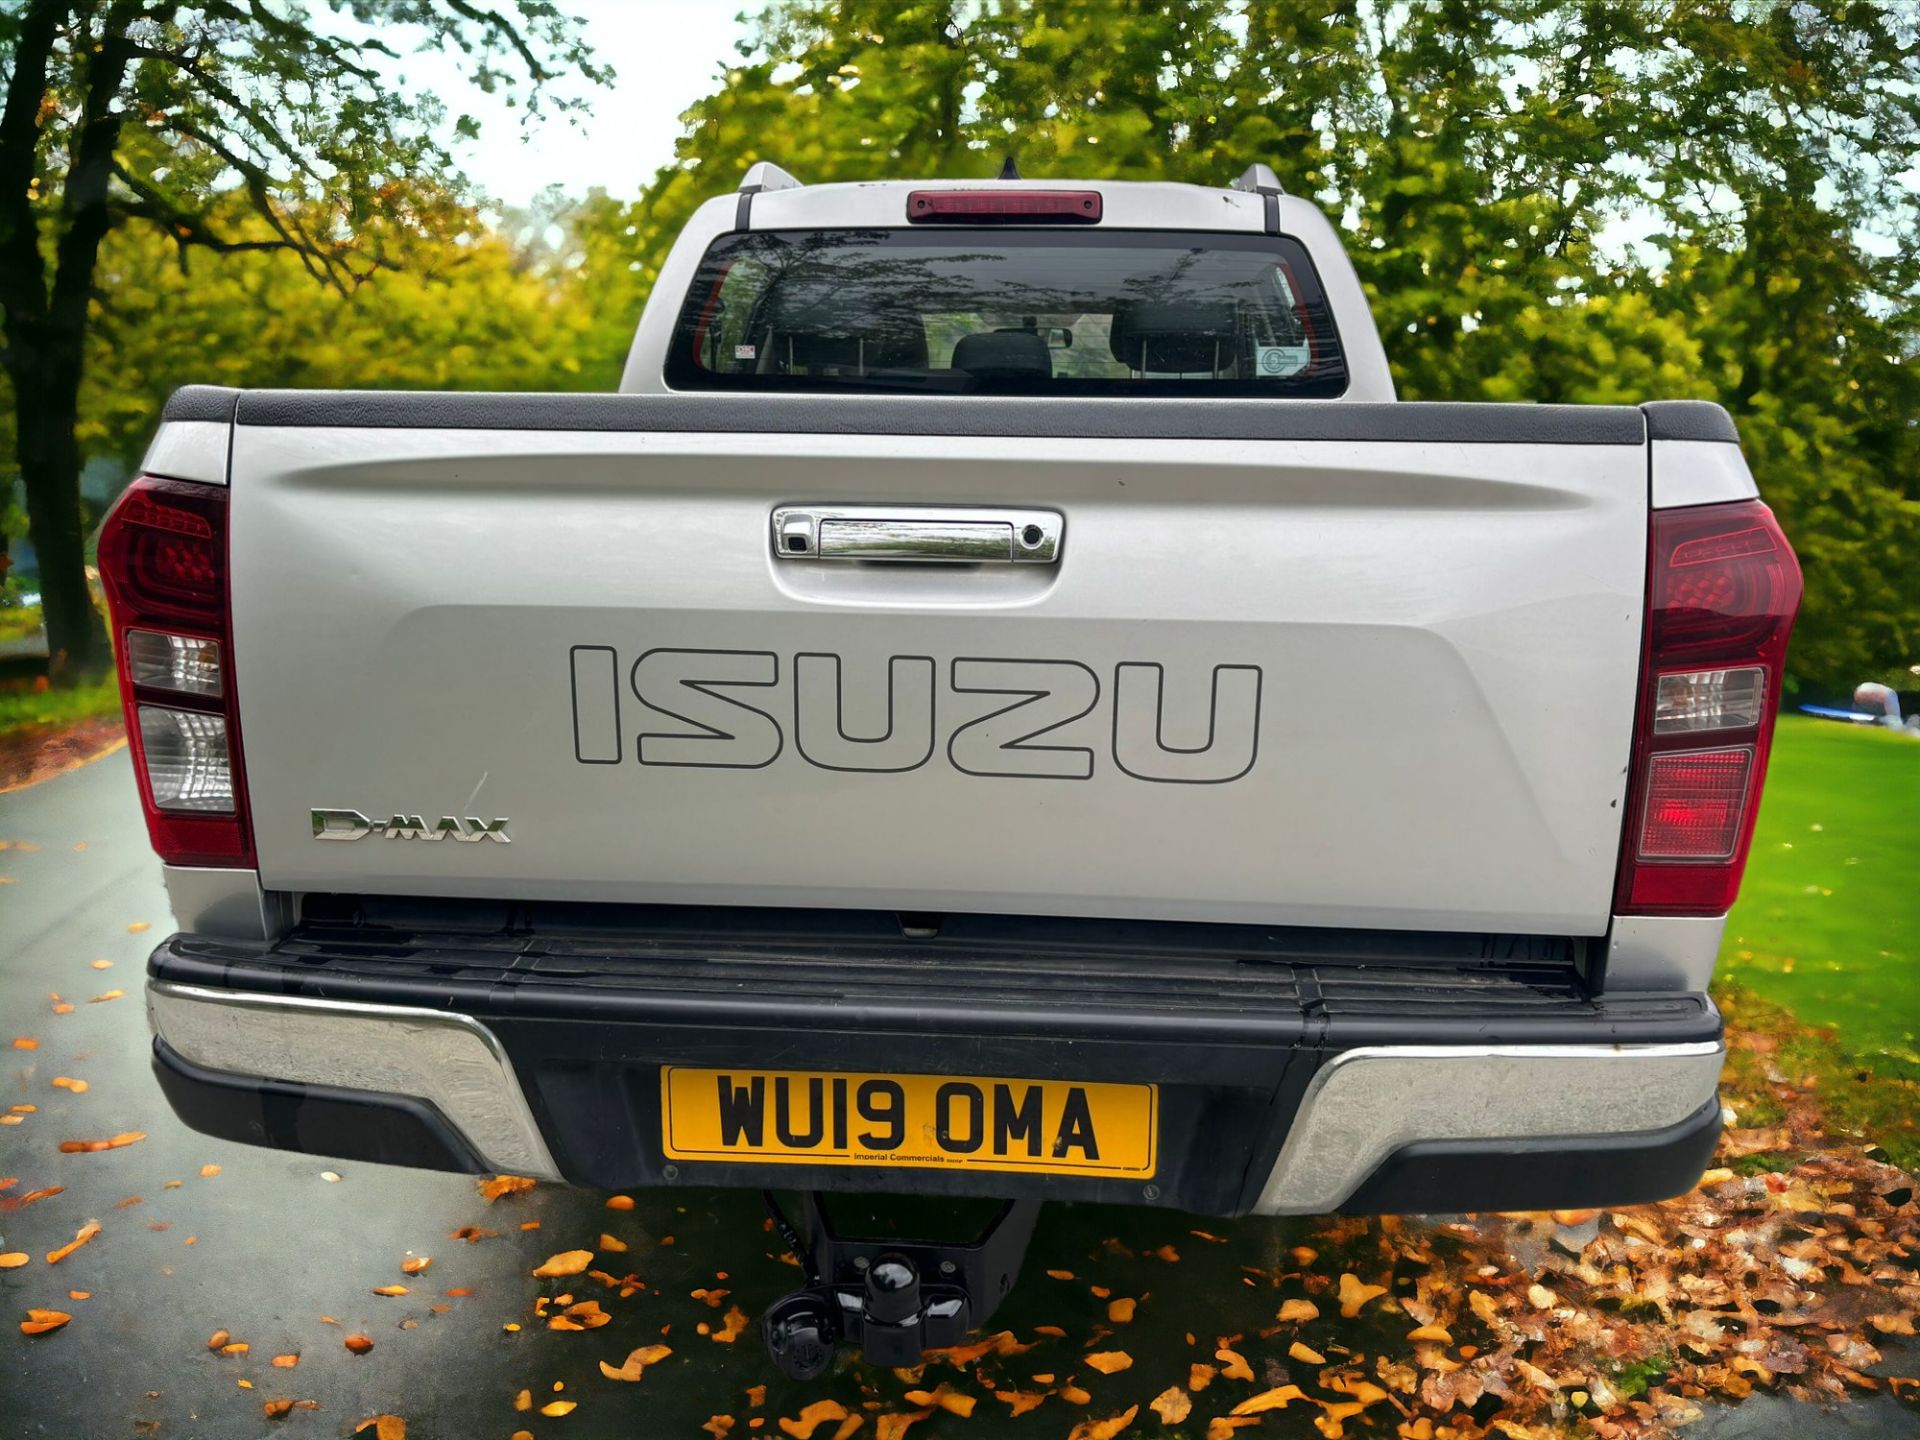 2019 ISUZU D-MAX DOUBLE CAB PICKUP TRUCK - Image 8 of 15